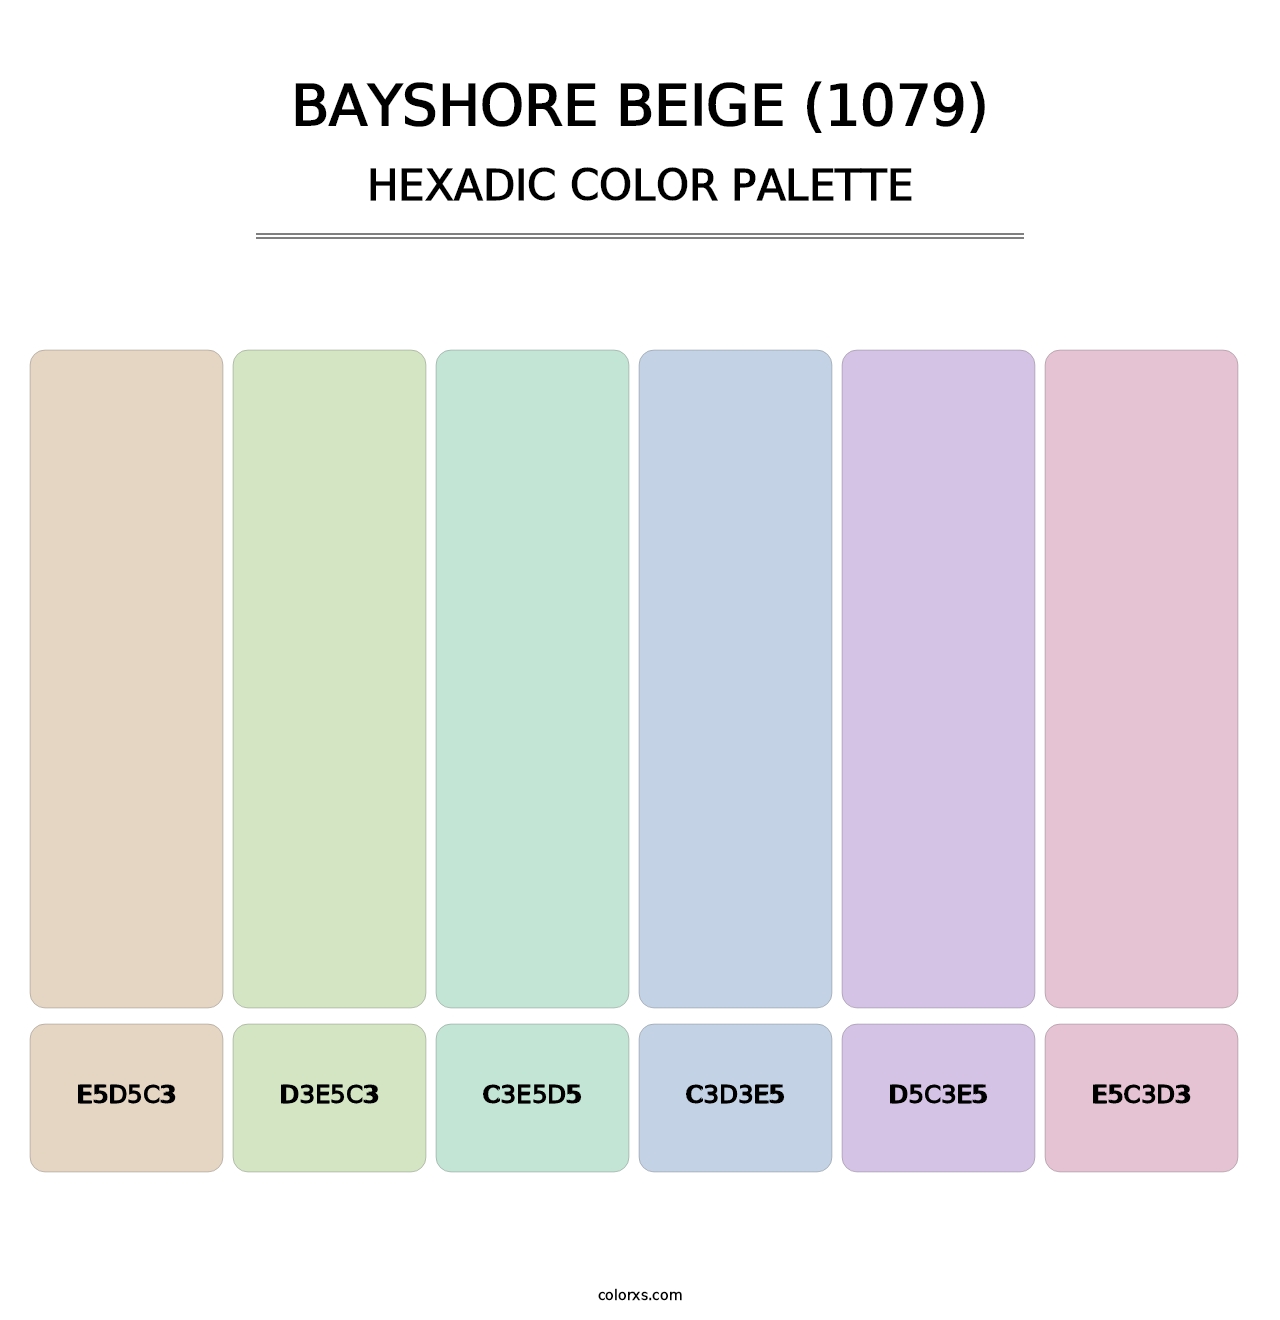 Bayshore Beige (1079) - Hexadic Color Palette